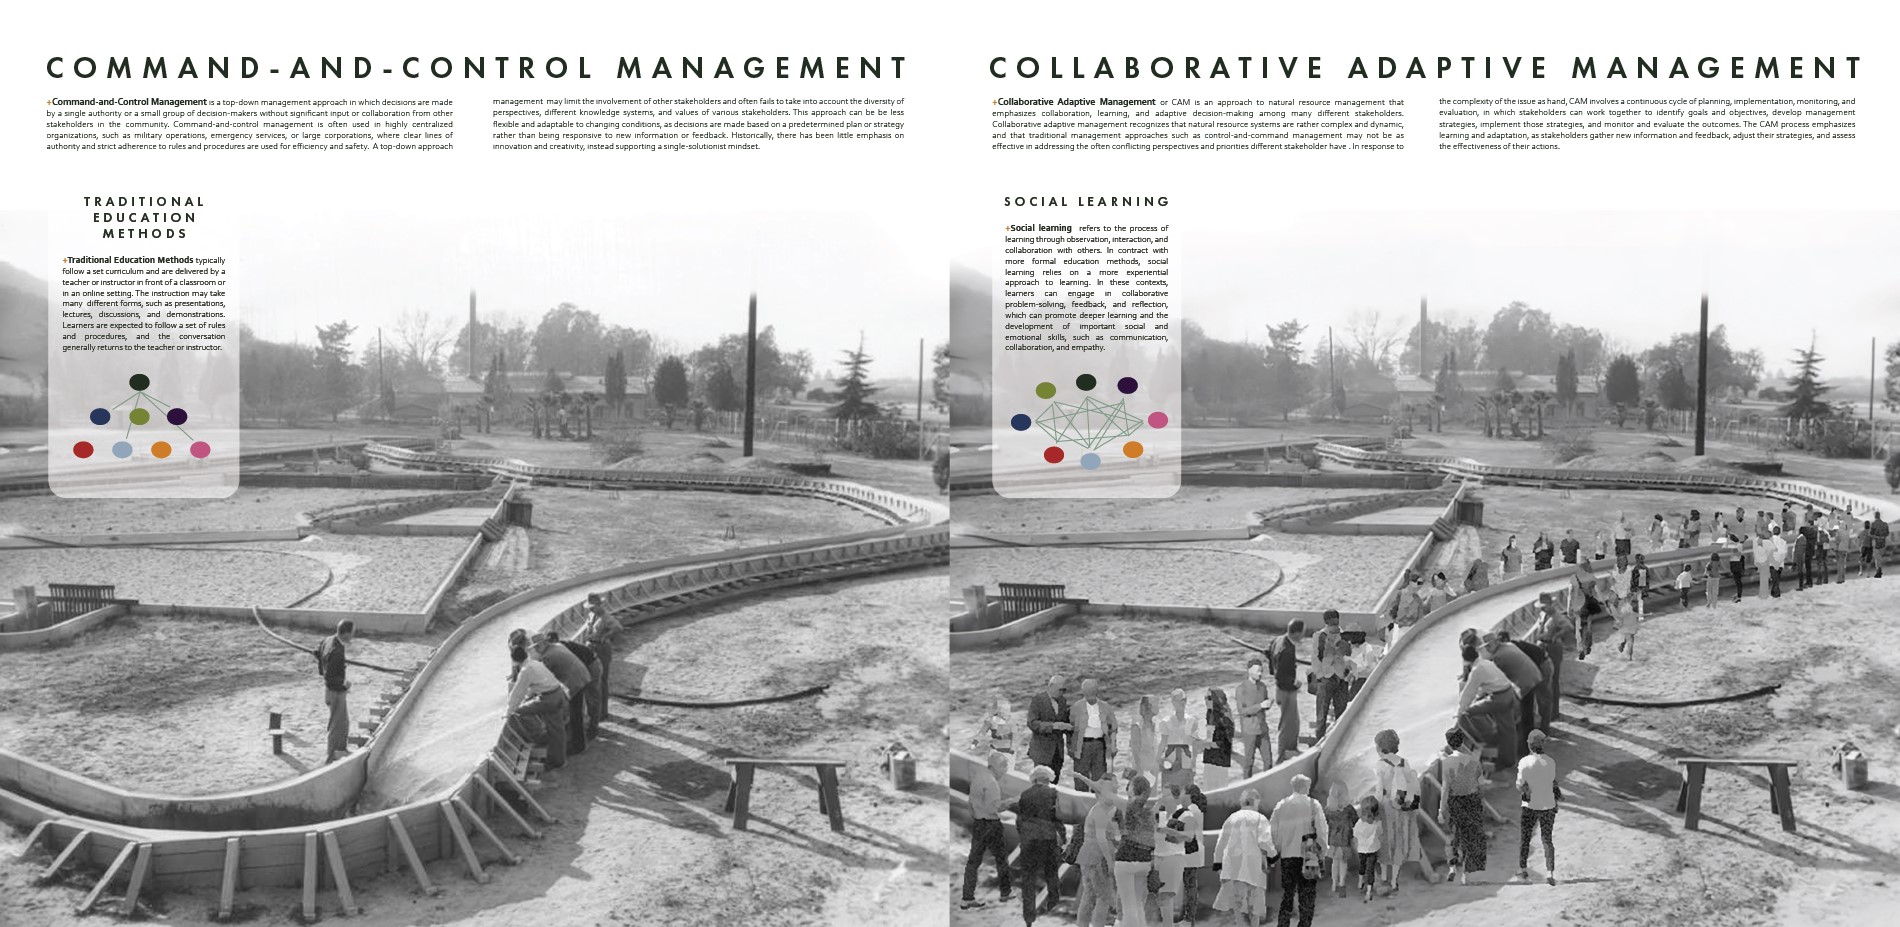 Command-and-Control Management Versus Collaborative Adaptive Management